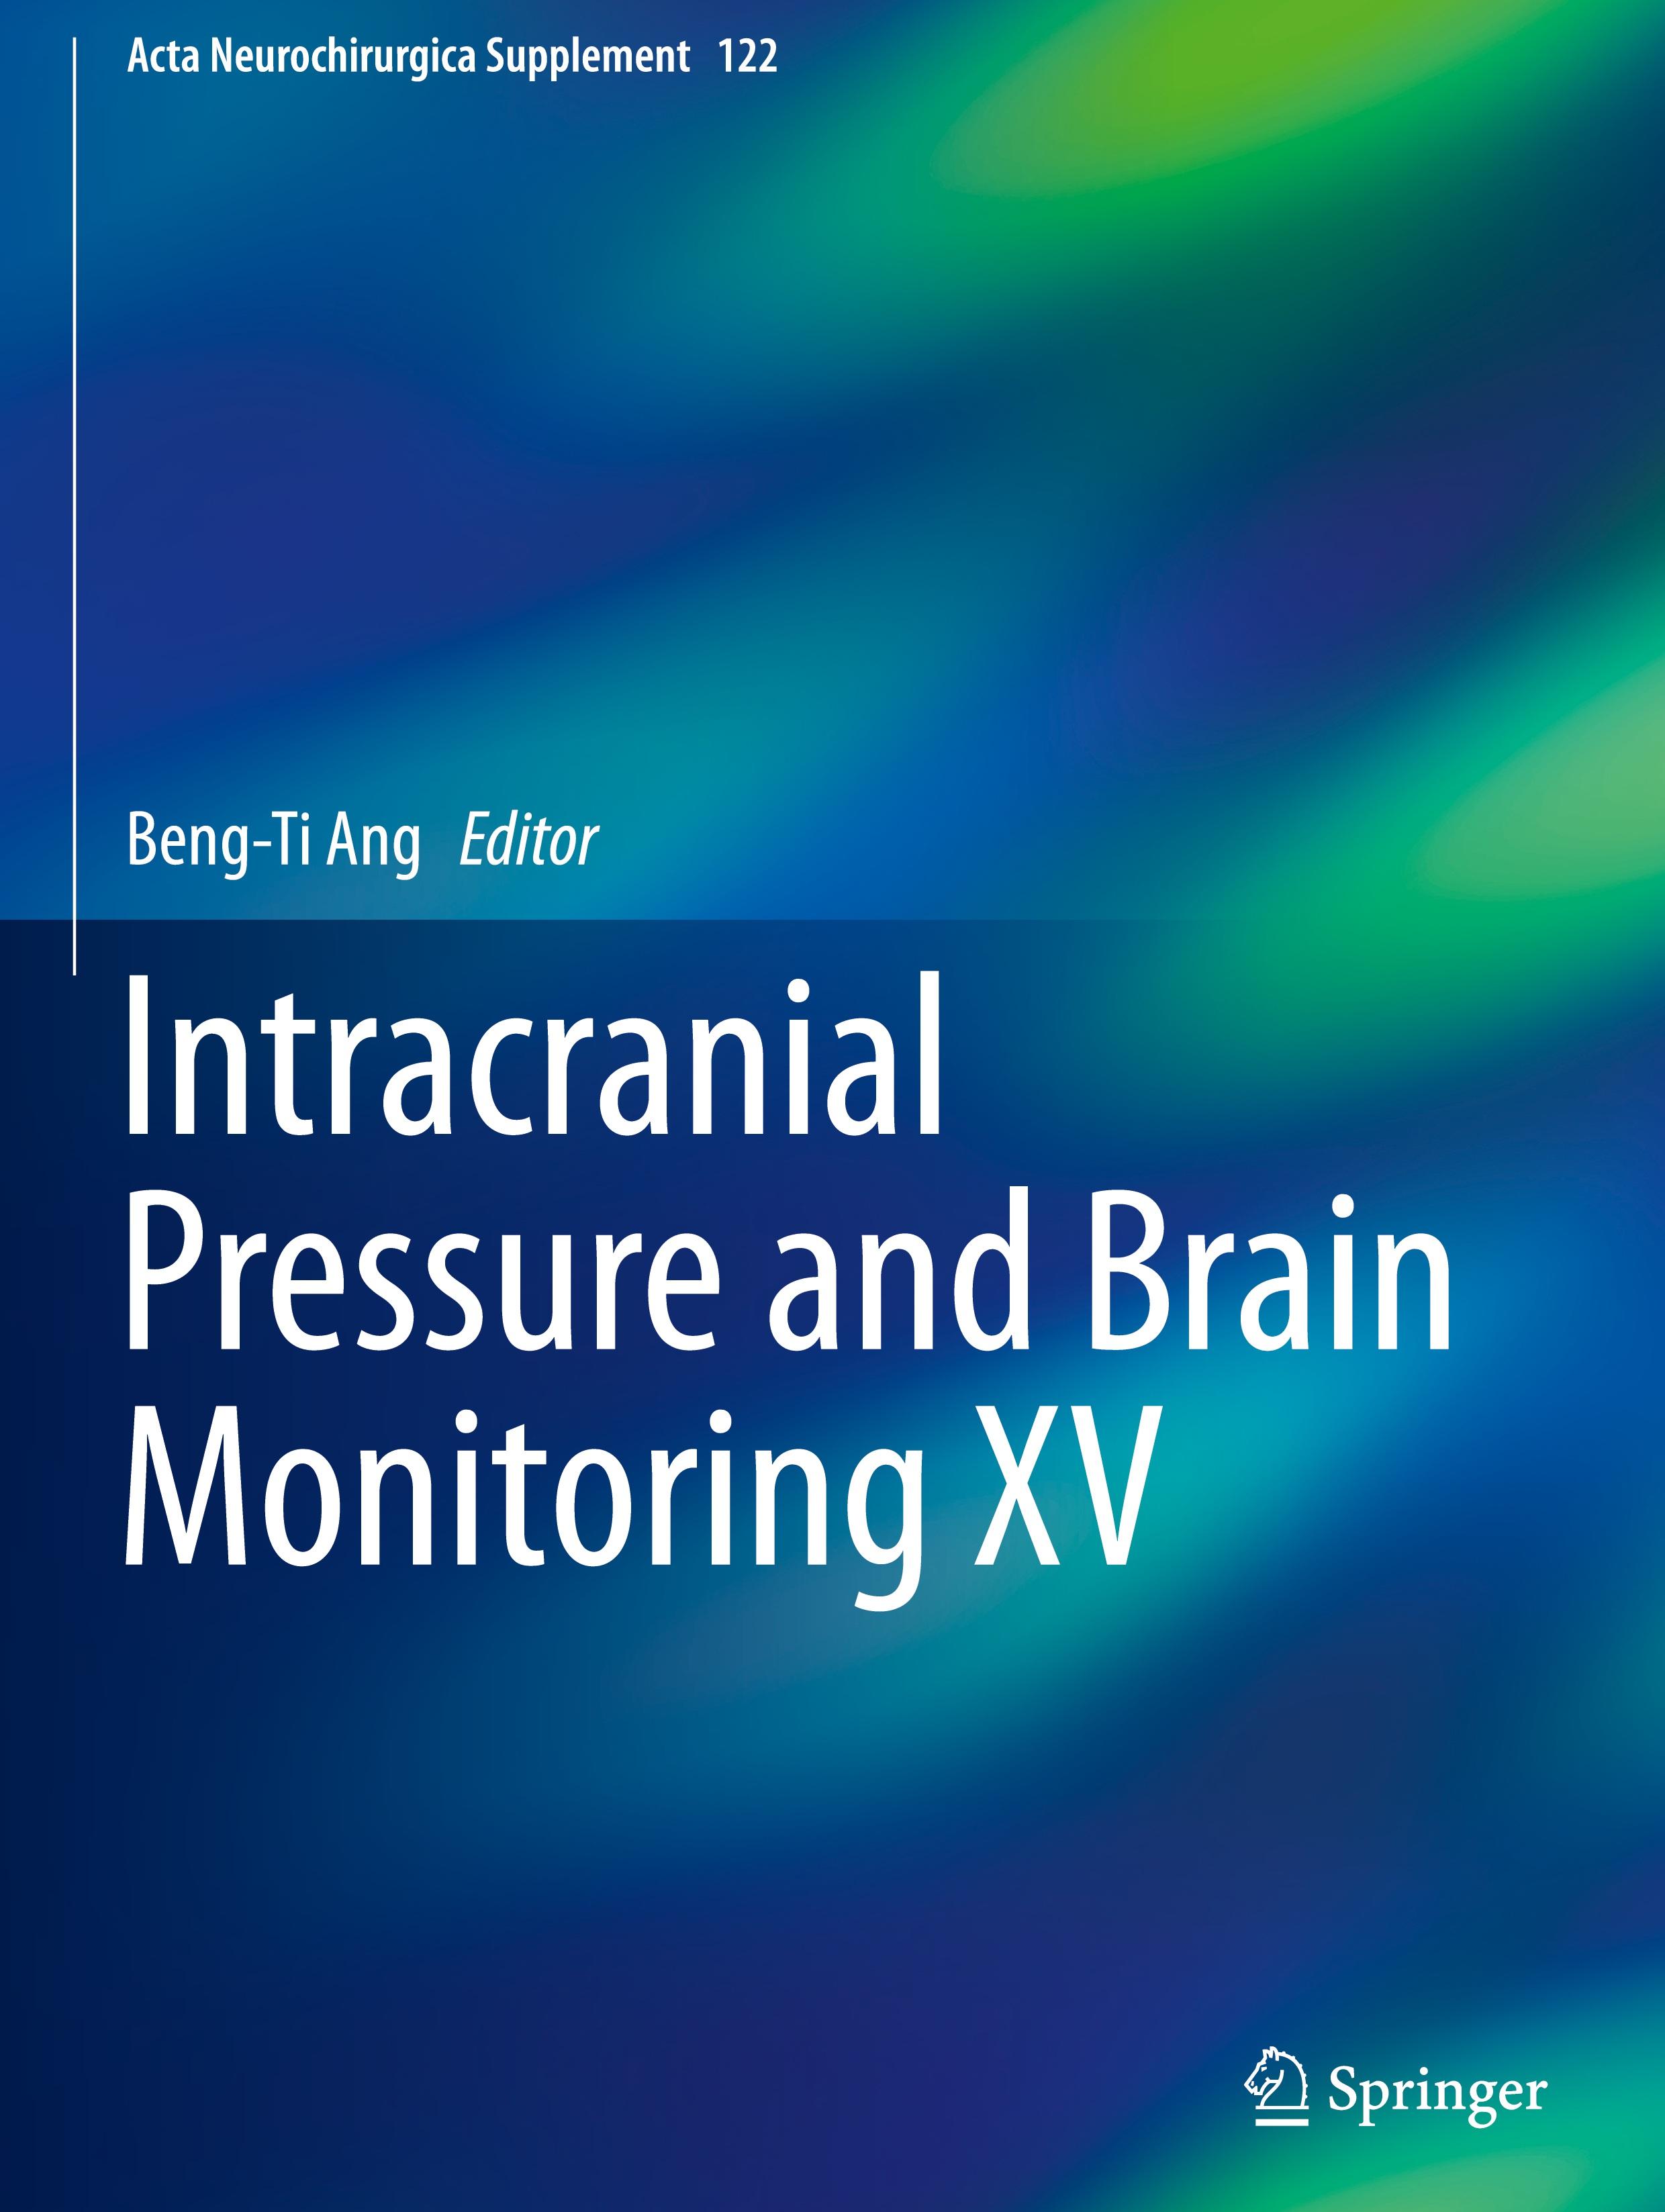 Intracranial Pressure and Brain Monitoring XV - Ang, Christopher Beng-Ti